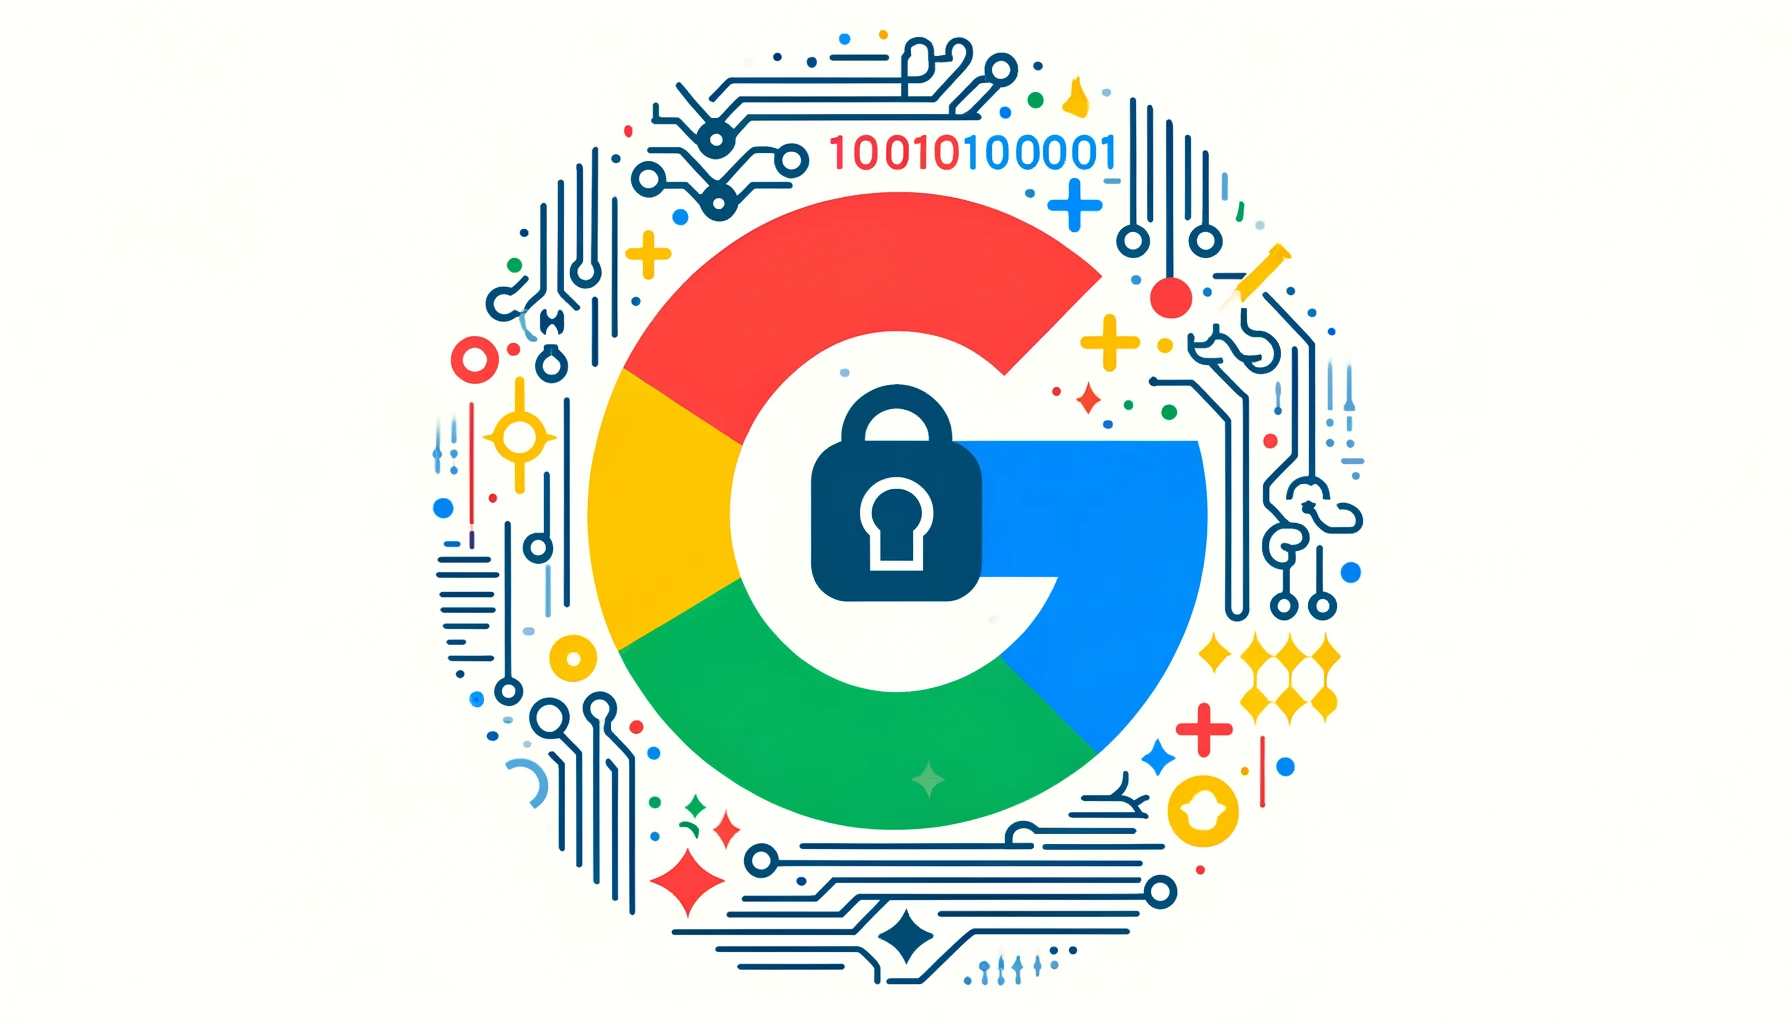 Google pivots its innovative AI strategy towards bolstering cybersecurity.